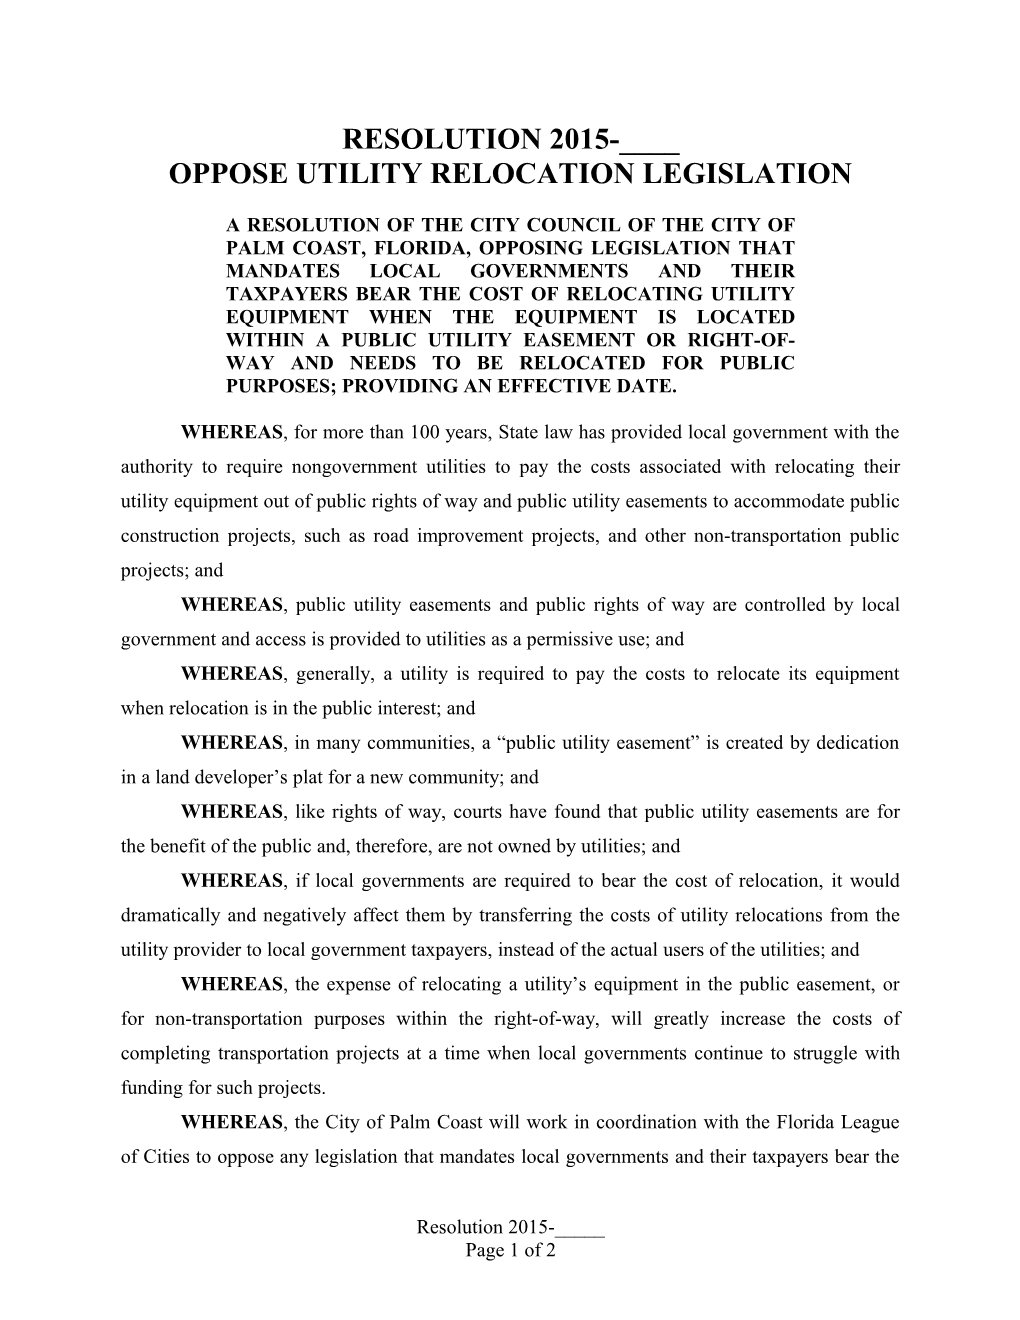 Oppose Utility Relocation Legislation